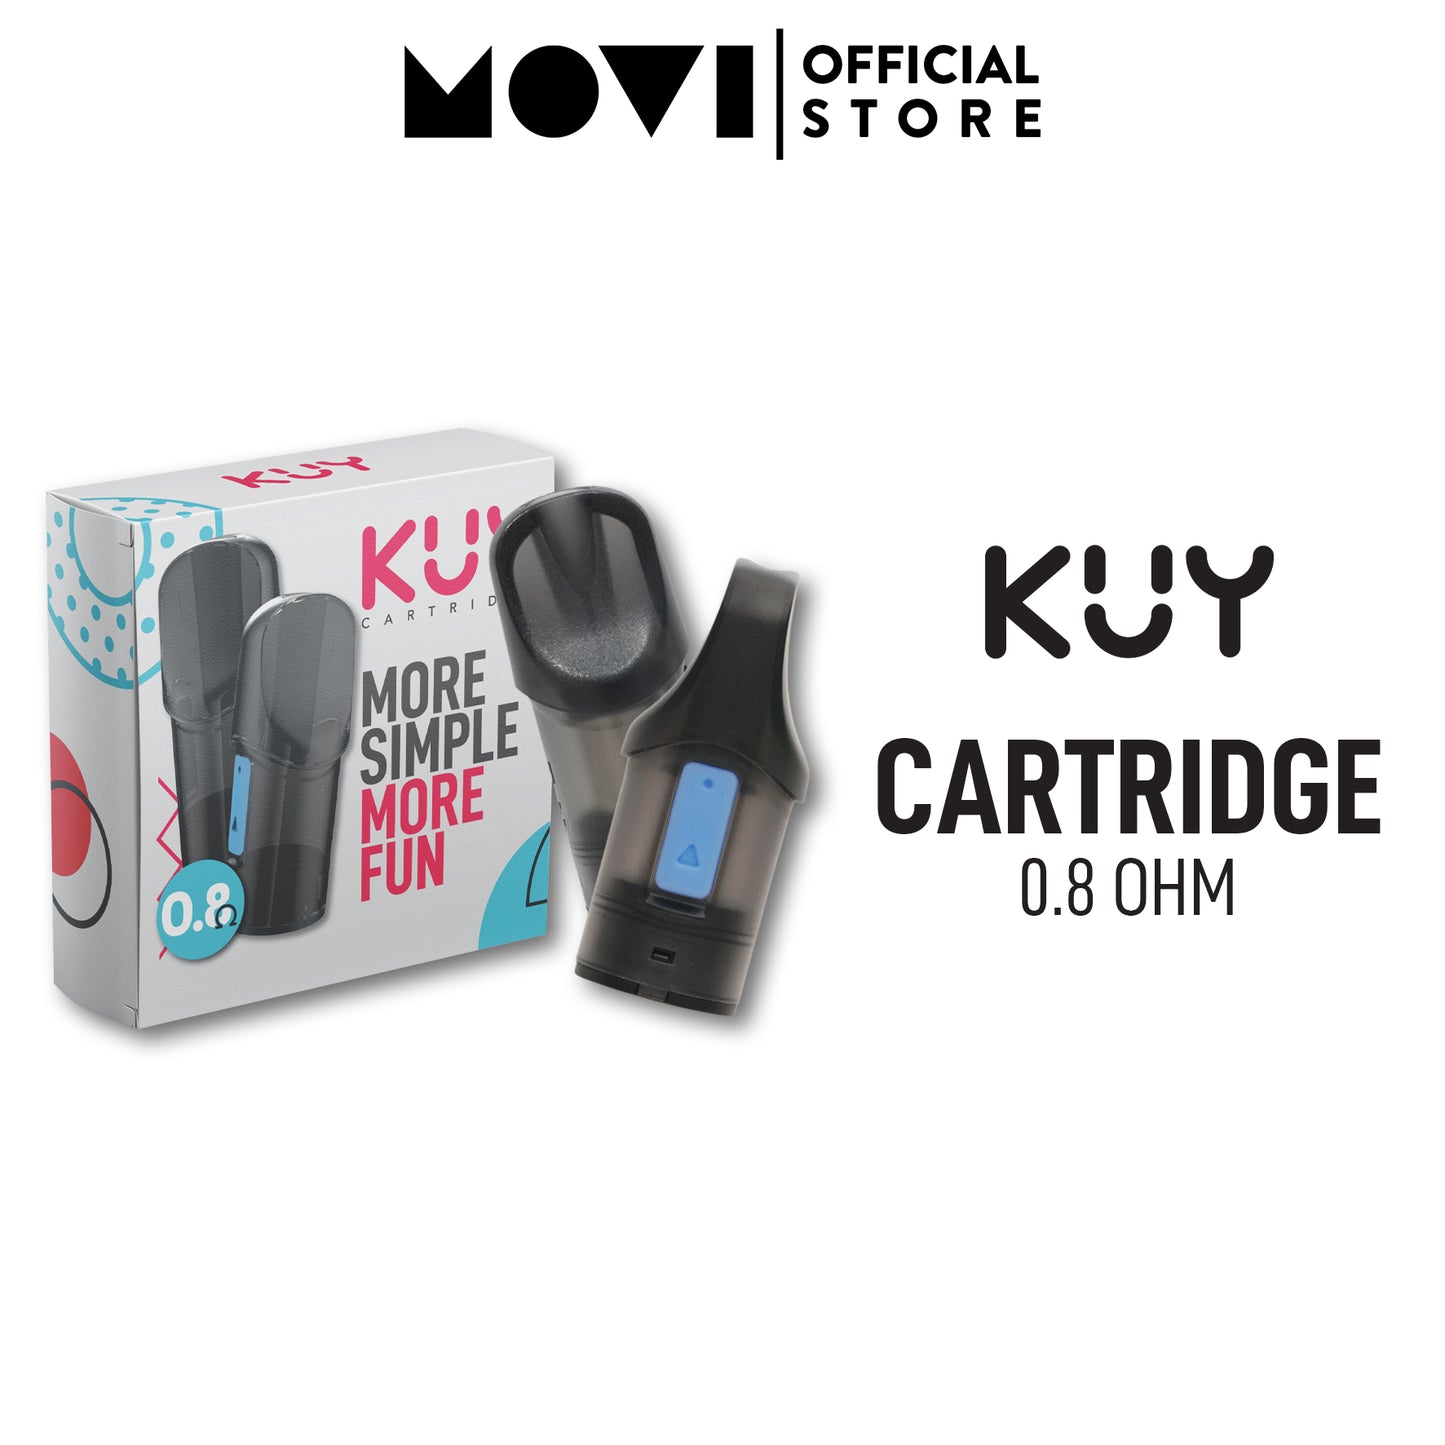 Catridge Kuy 0,8 by Movi